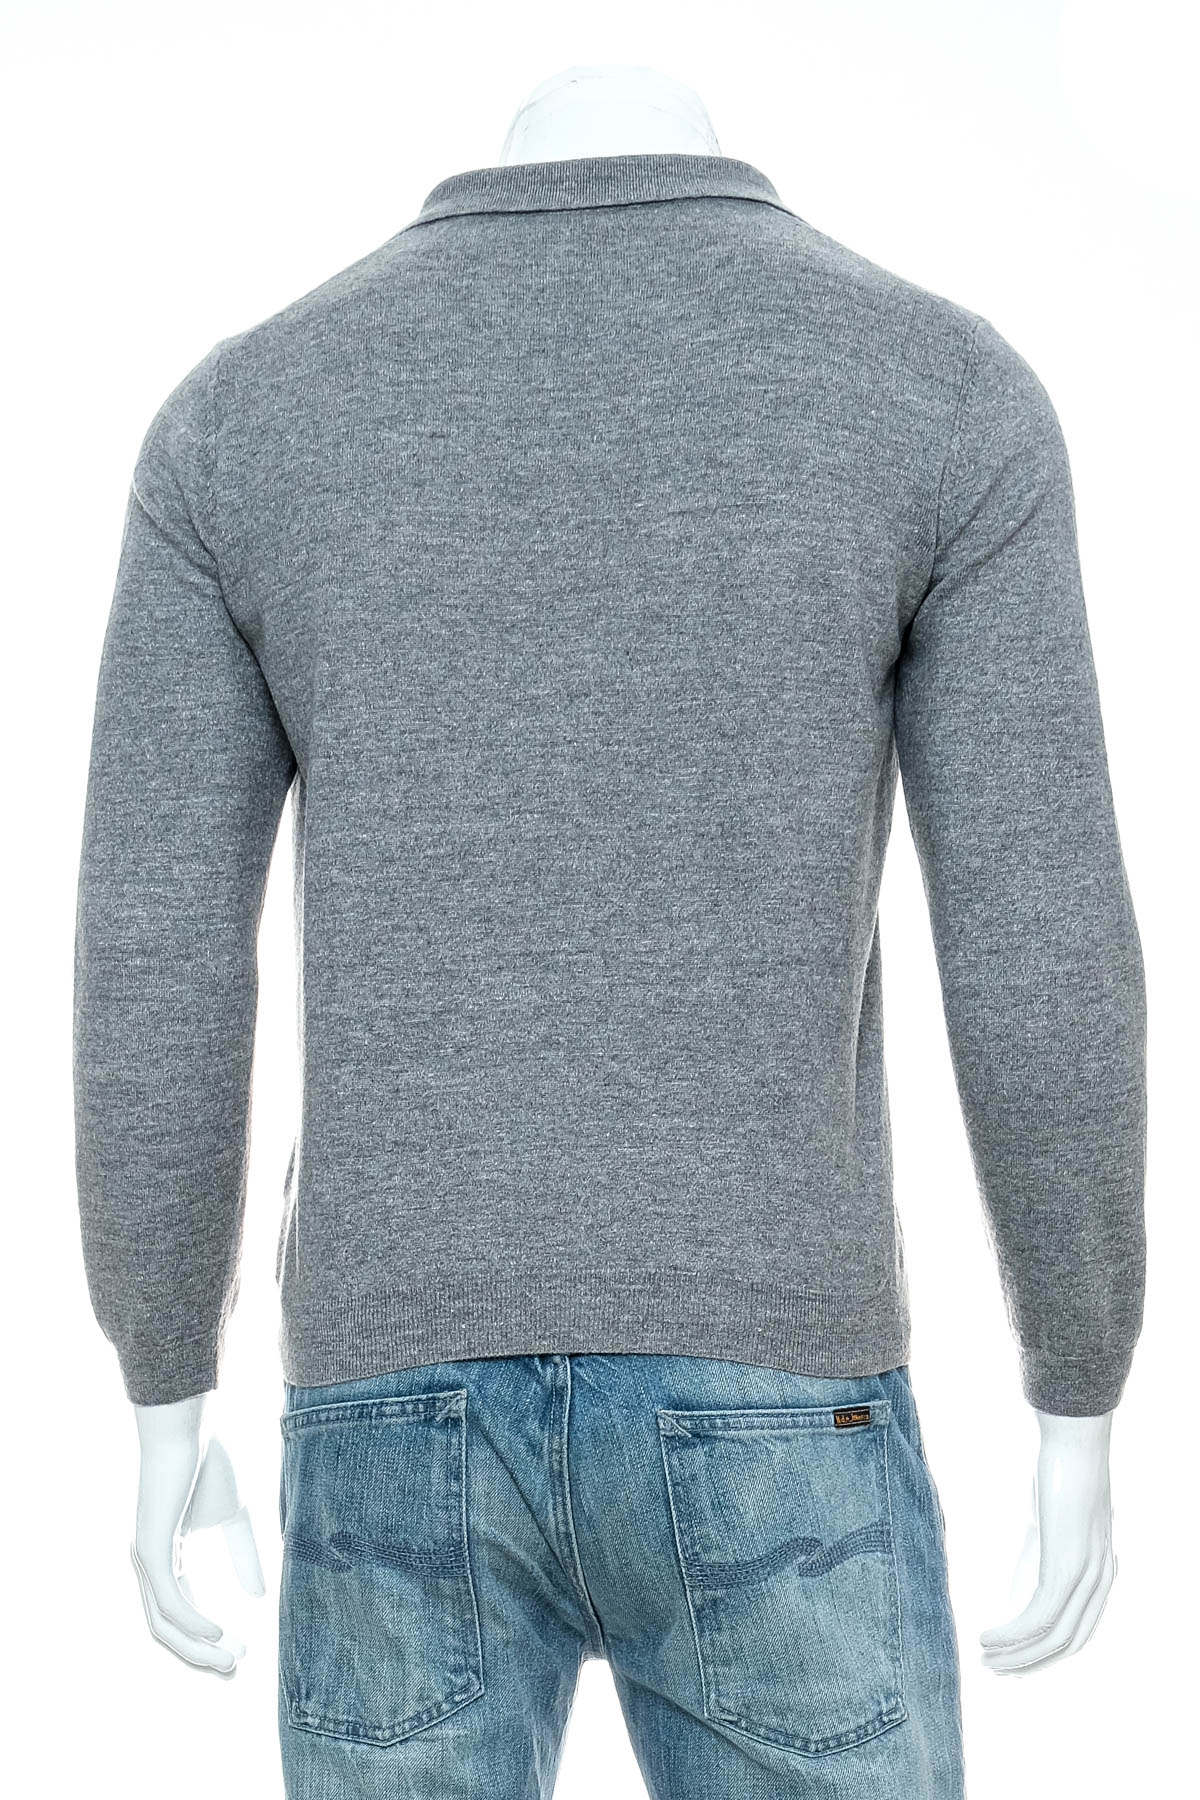 Men's sweater - BOSS - 1